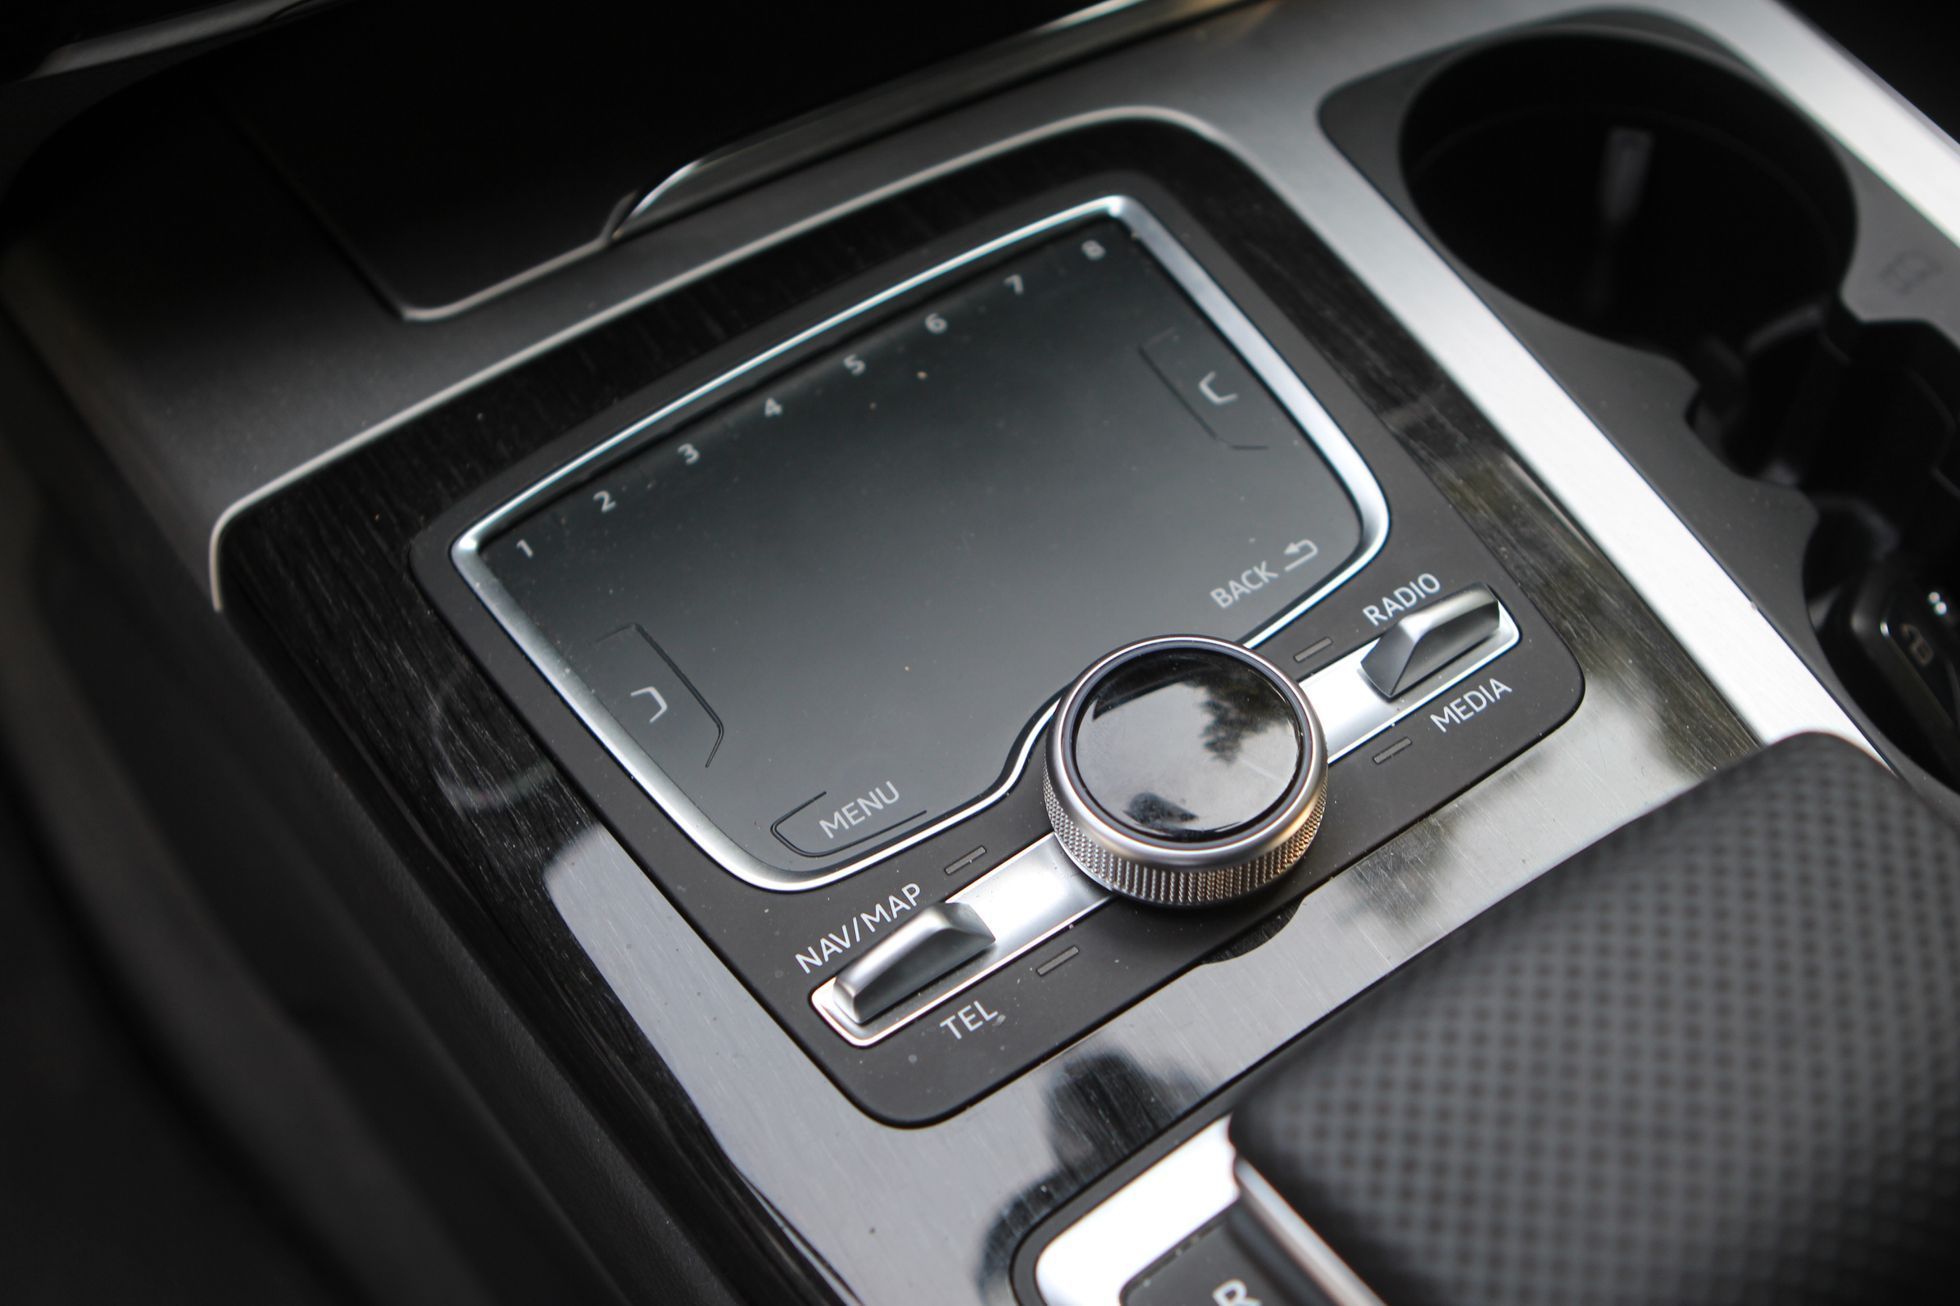 Audi Q7 - touchpad